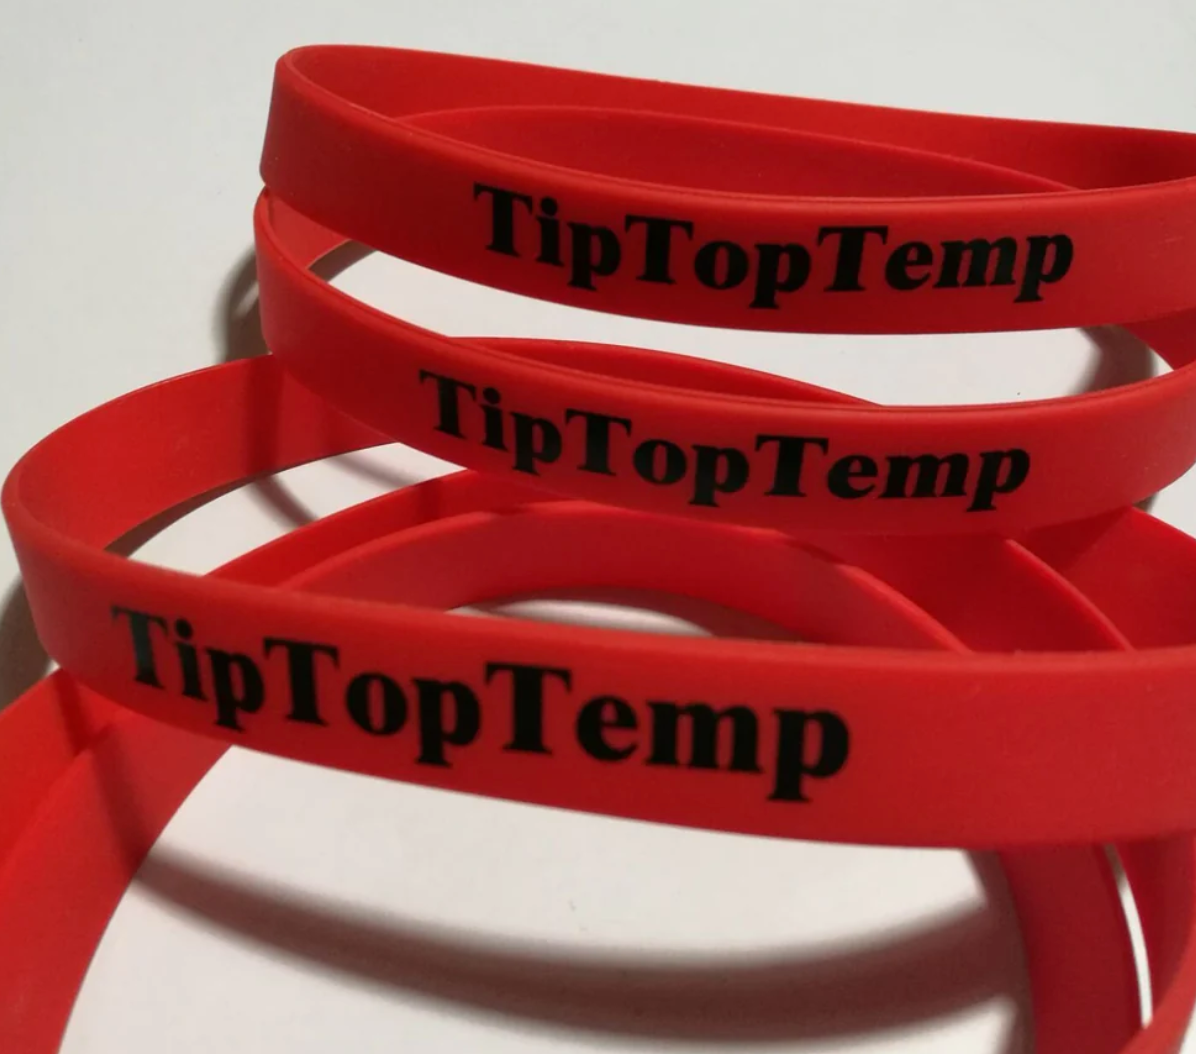 Tip Top Temp 5/8th Adapter Band